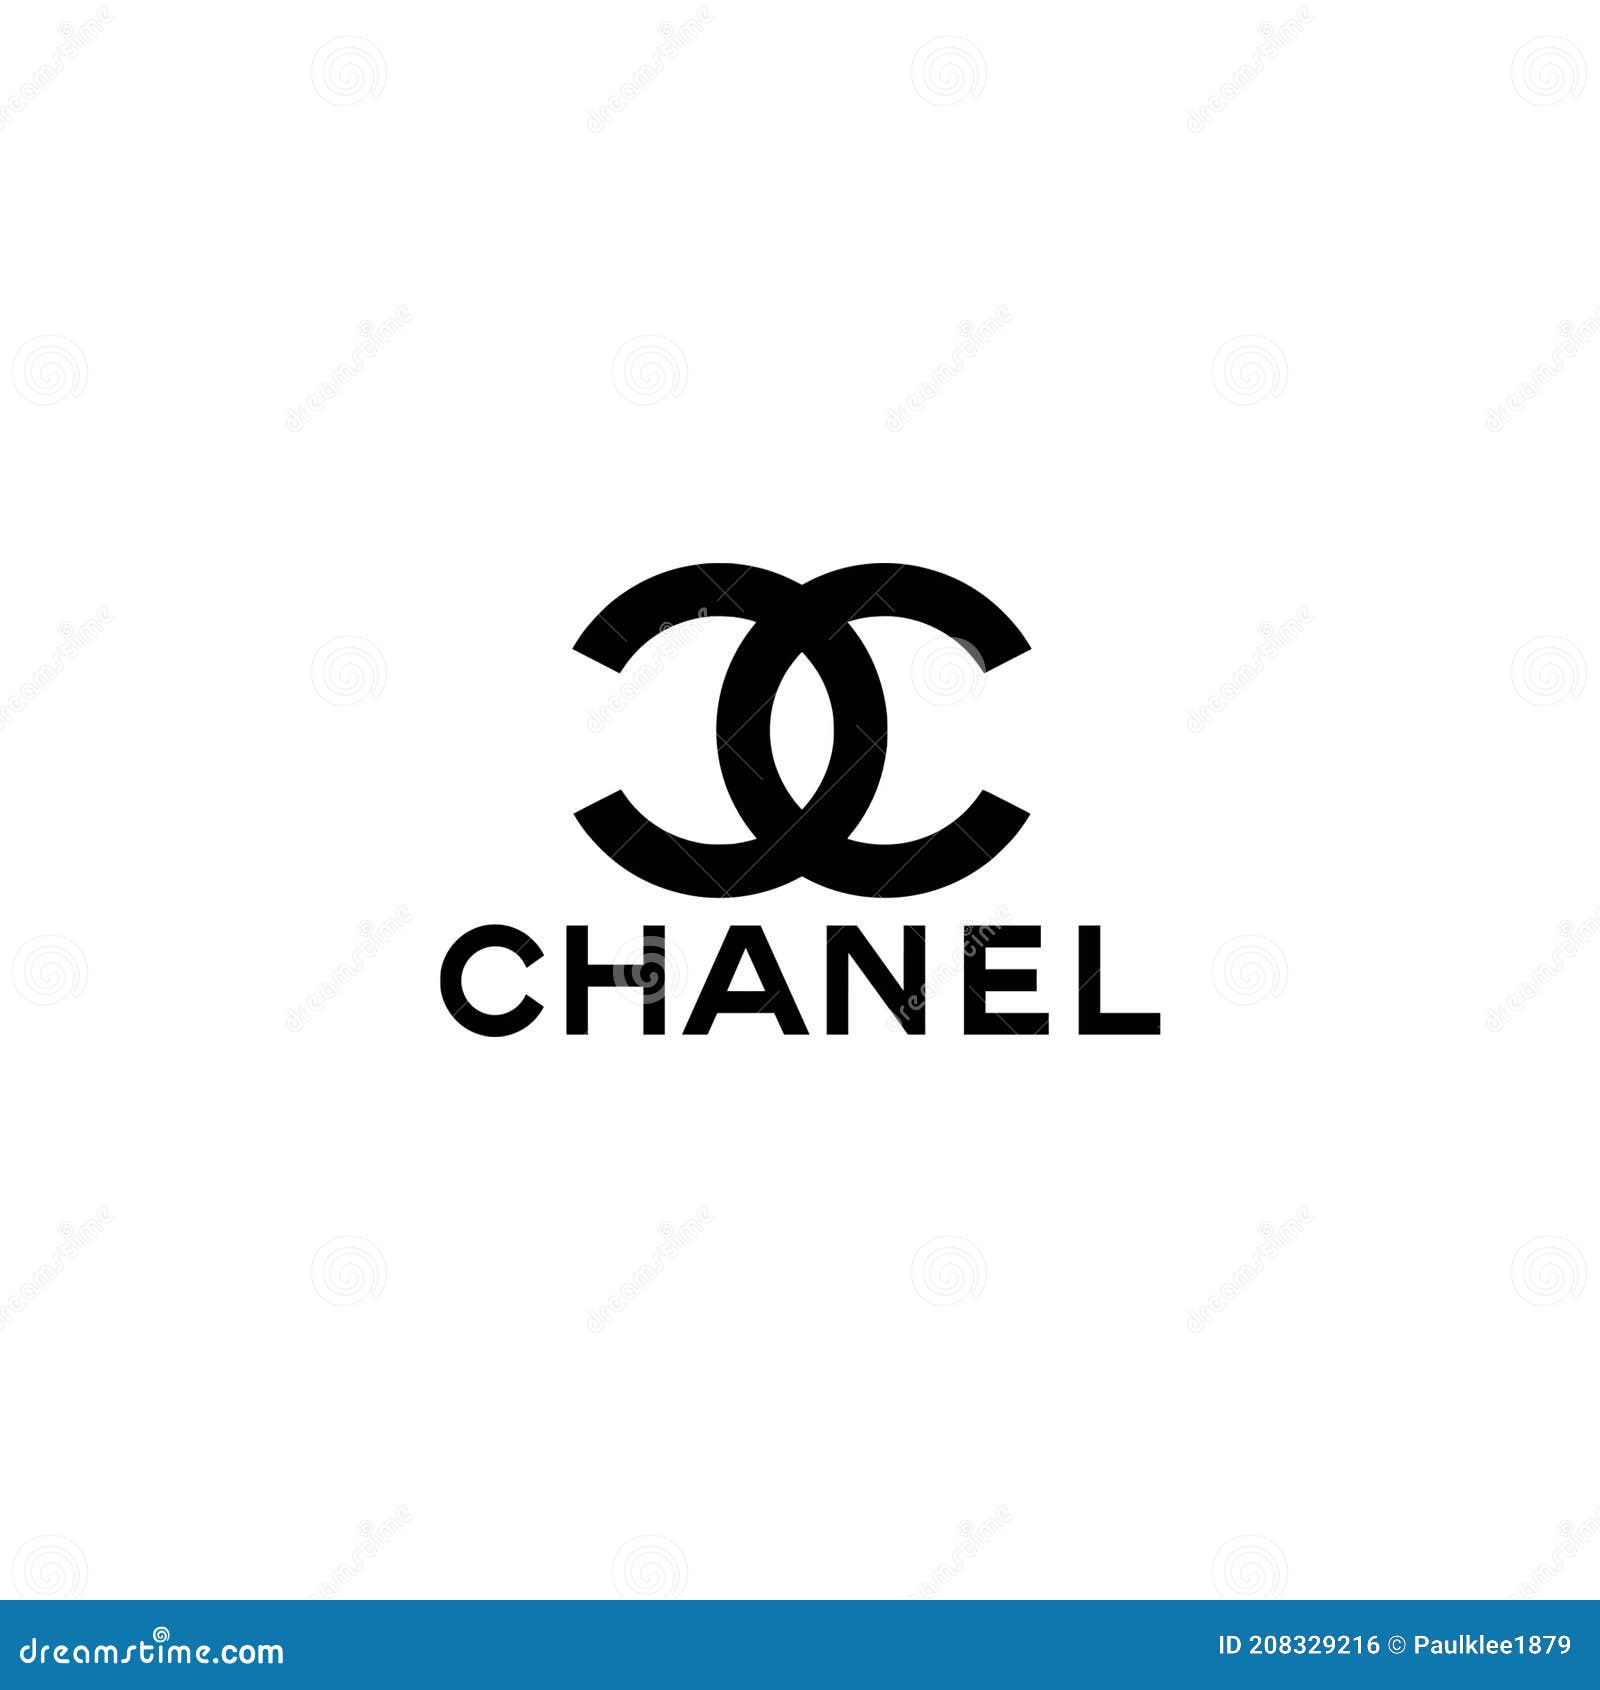 Chanel Logo Editorial Illustrative on White Background Editorial Photo ...